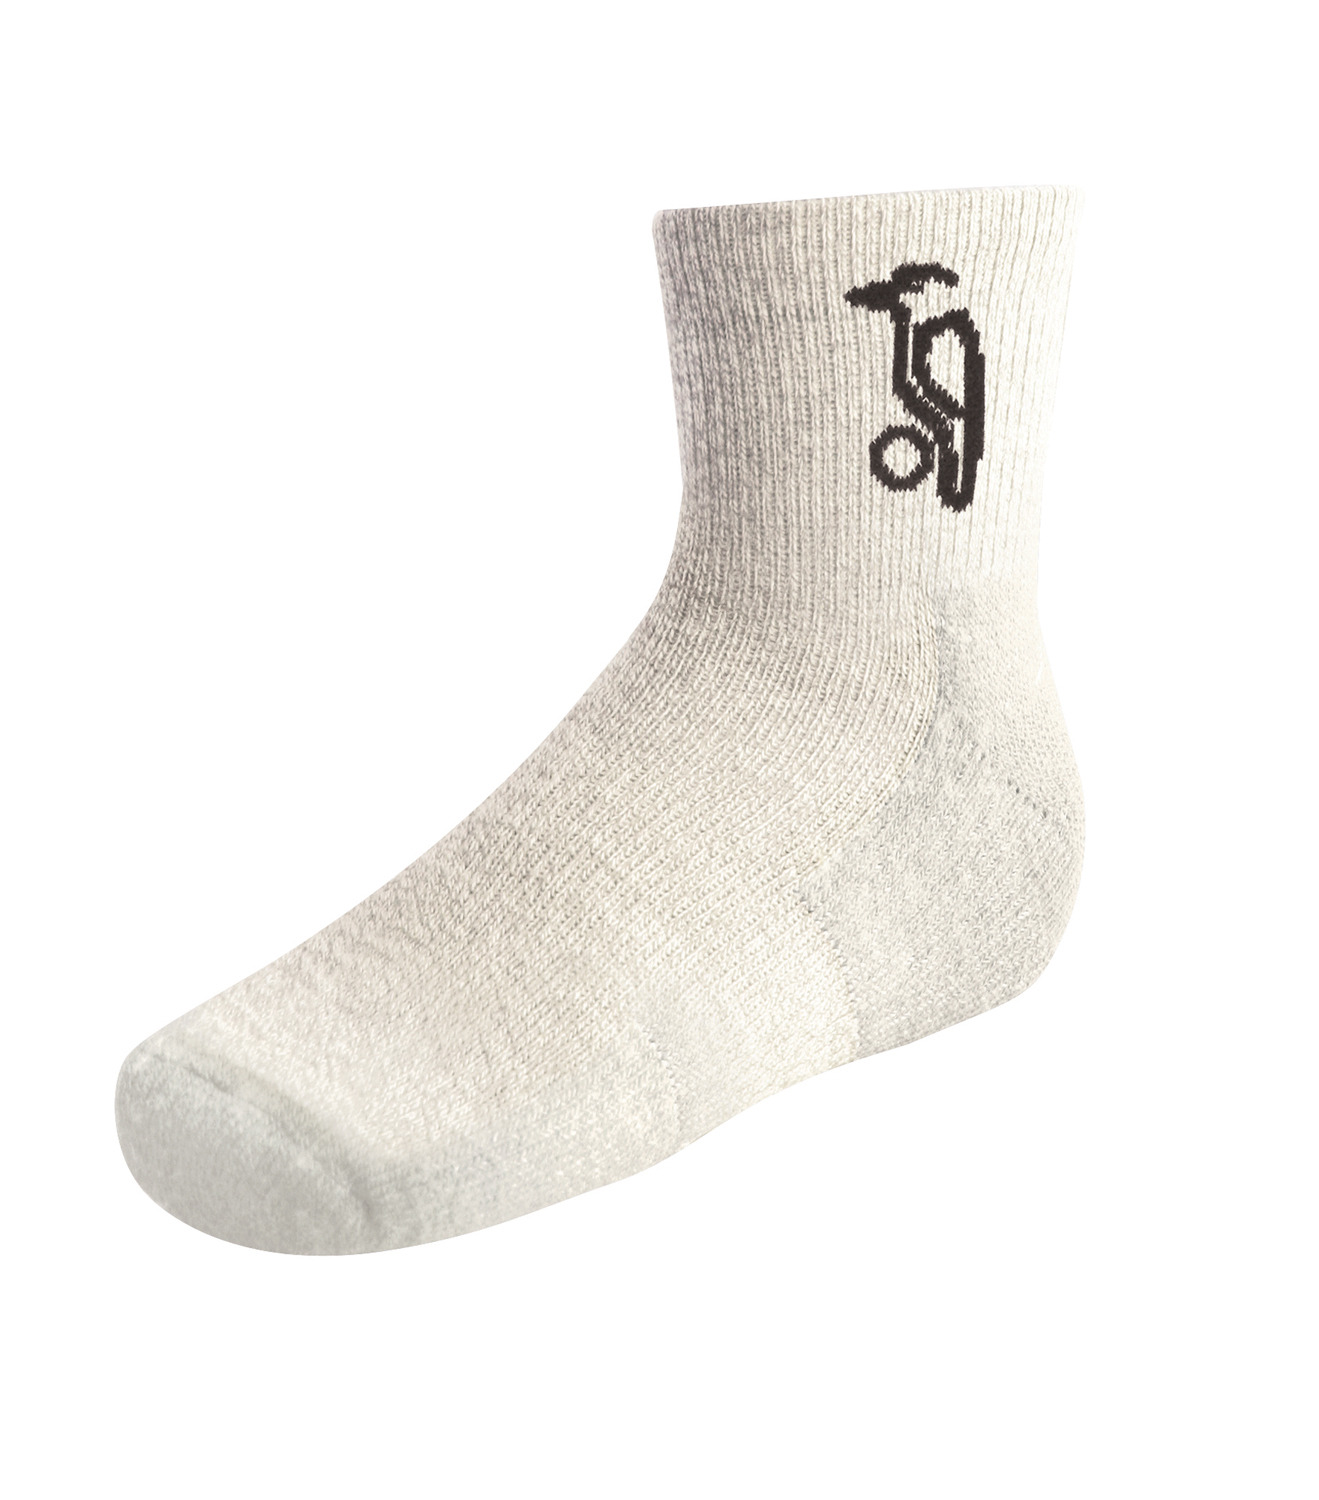 Kookaburra Players Ped Sock [Size: 8-11]